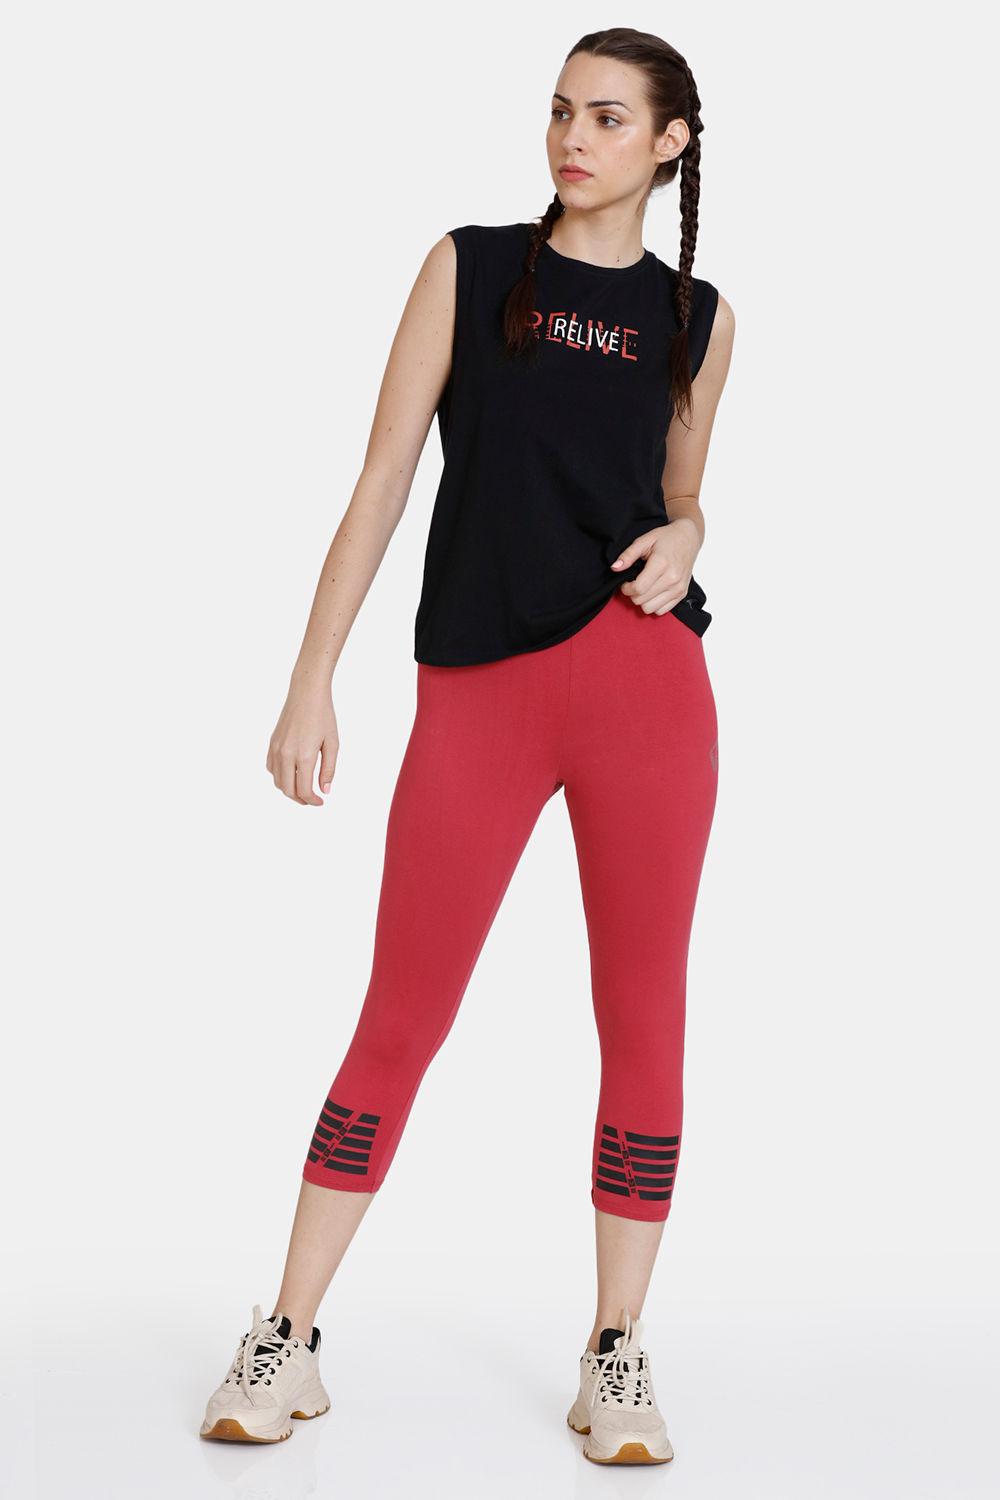 Showstopper Legging - Shop Activewear For Women – NoorFit